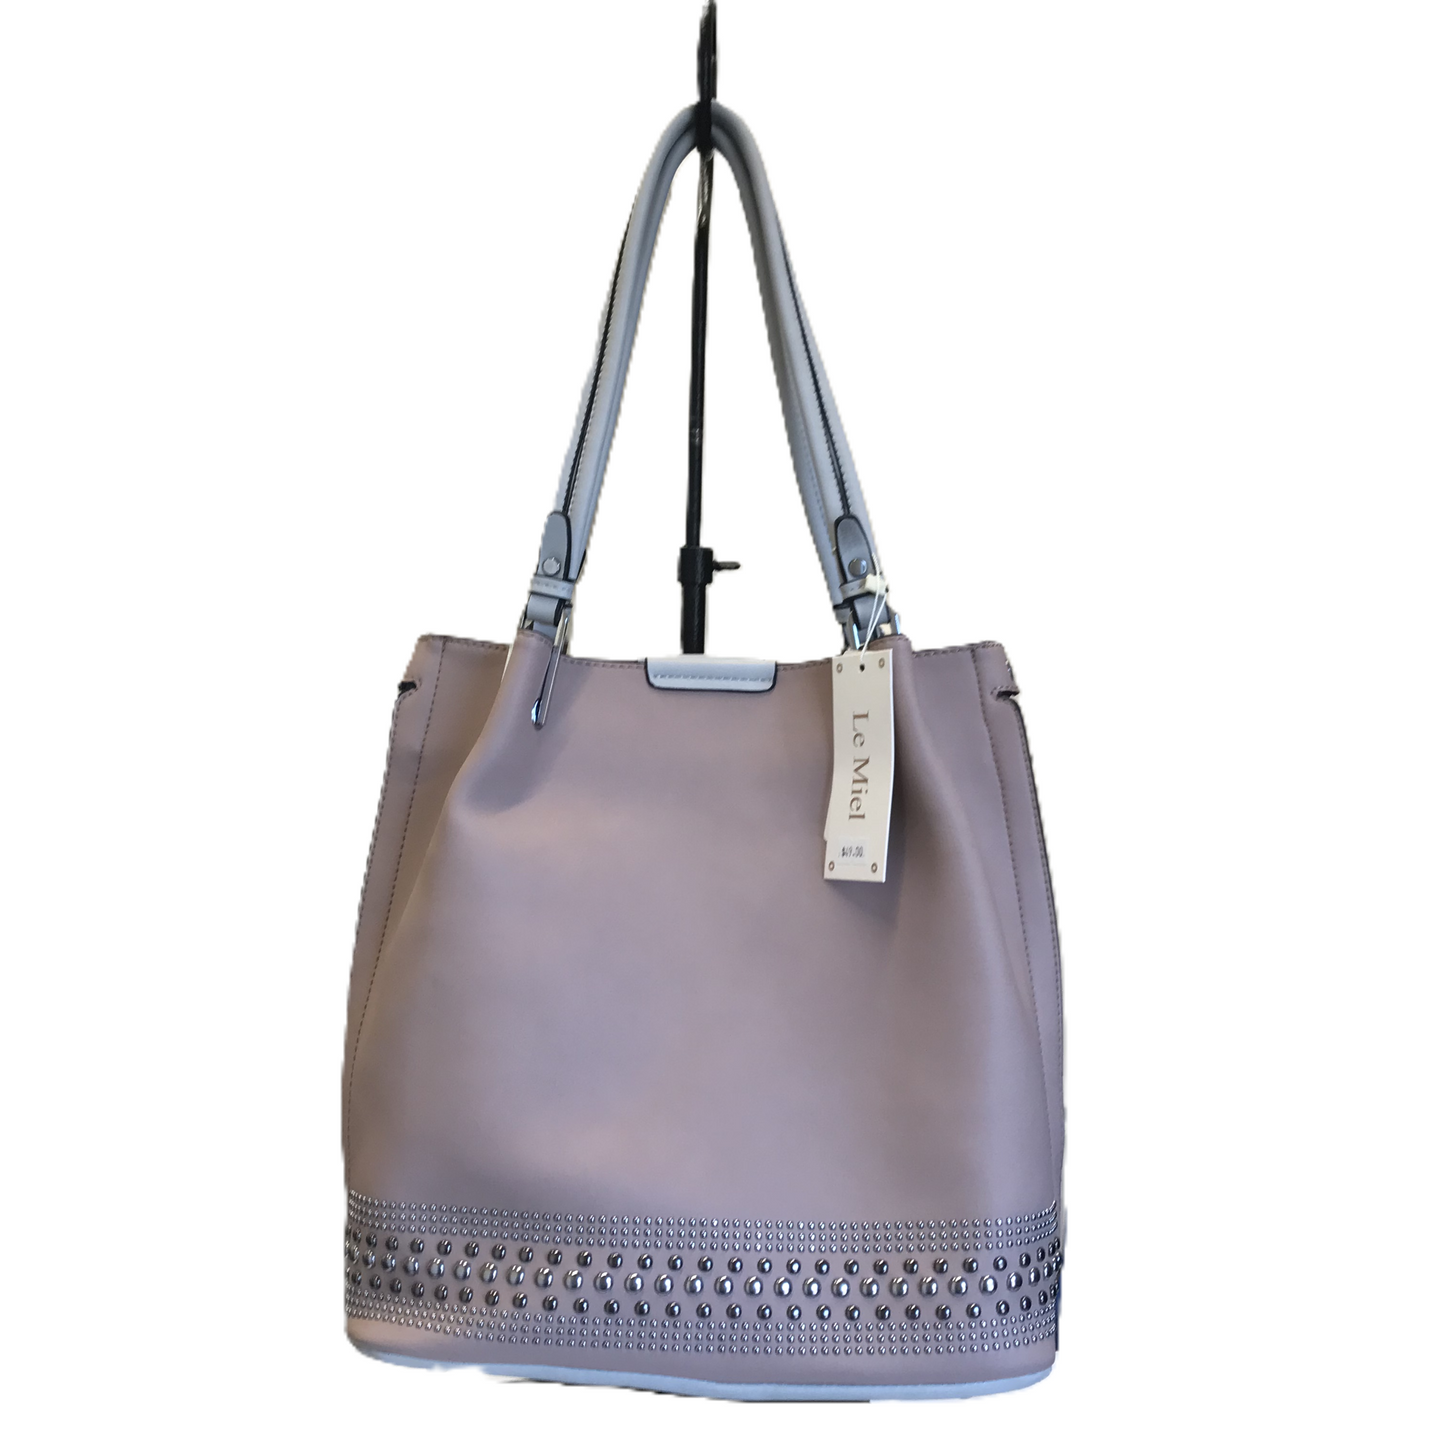 Handbag By Le Miel , Size: Large